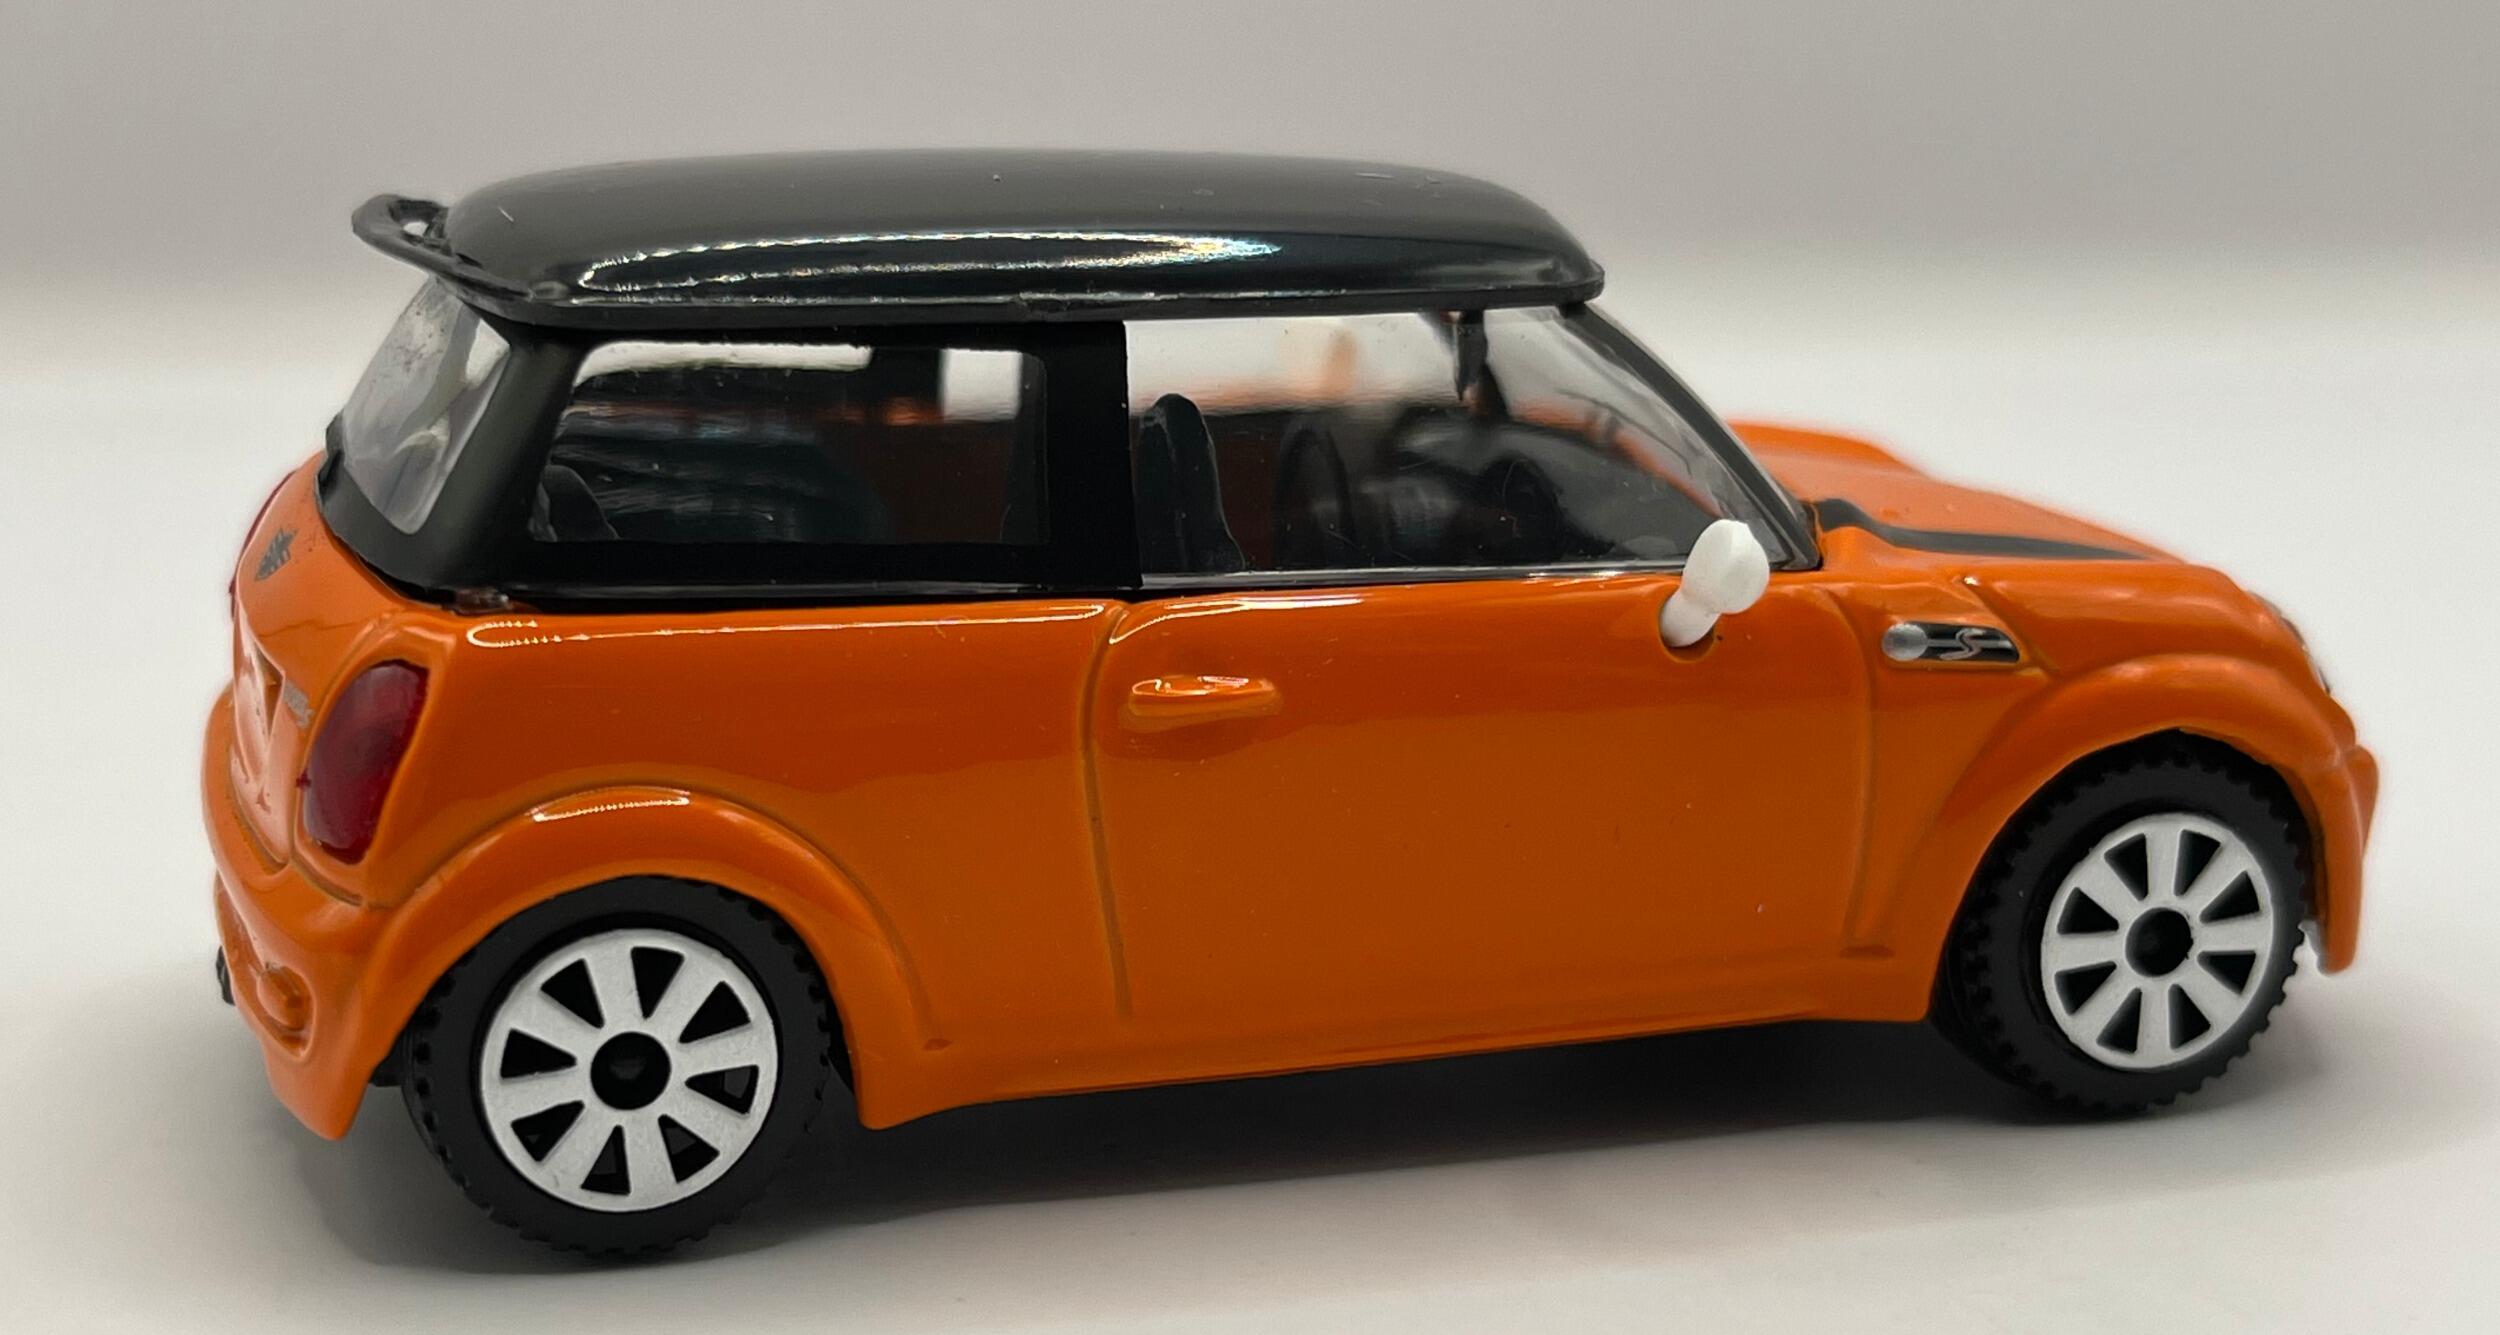 Mini Cooper S in orange with black roof, 1:43 scale diecast car model ...